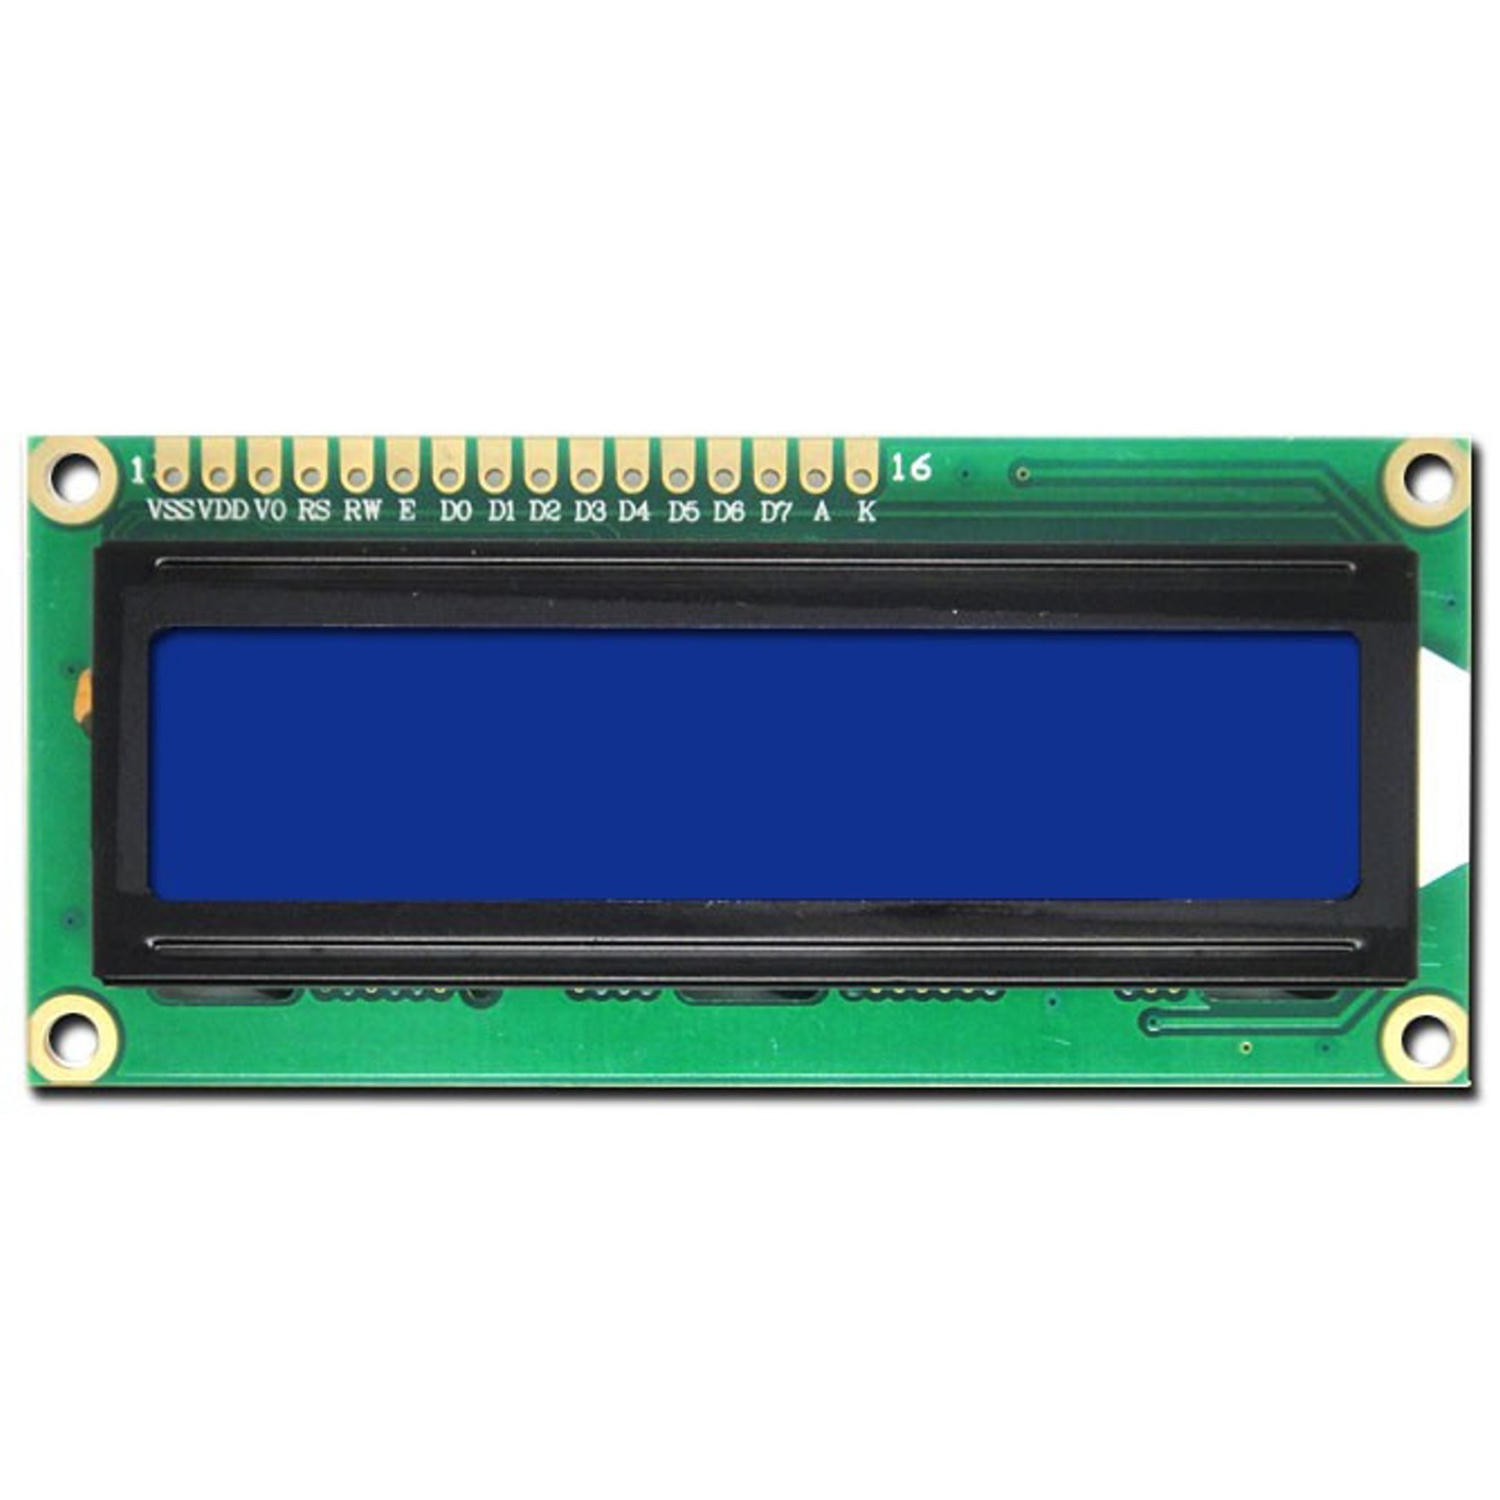 LCD 1602 символьный дисплей 16x2 (синий), фото